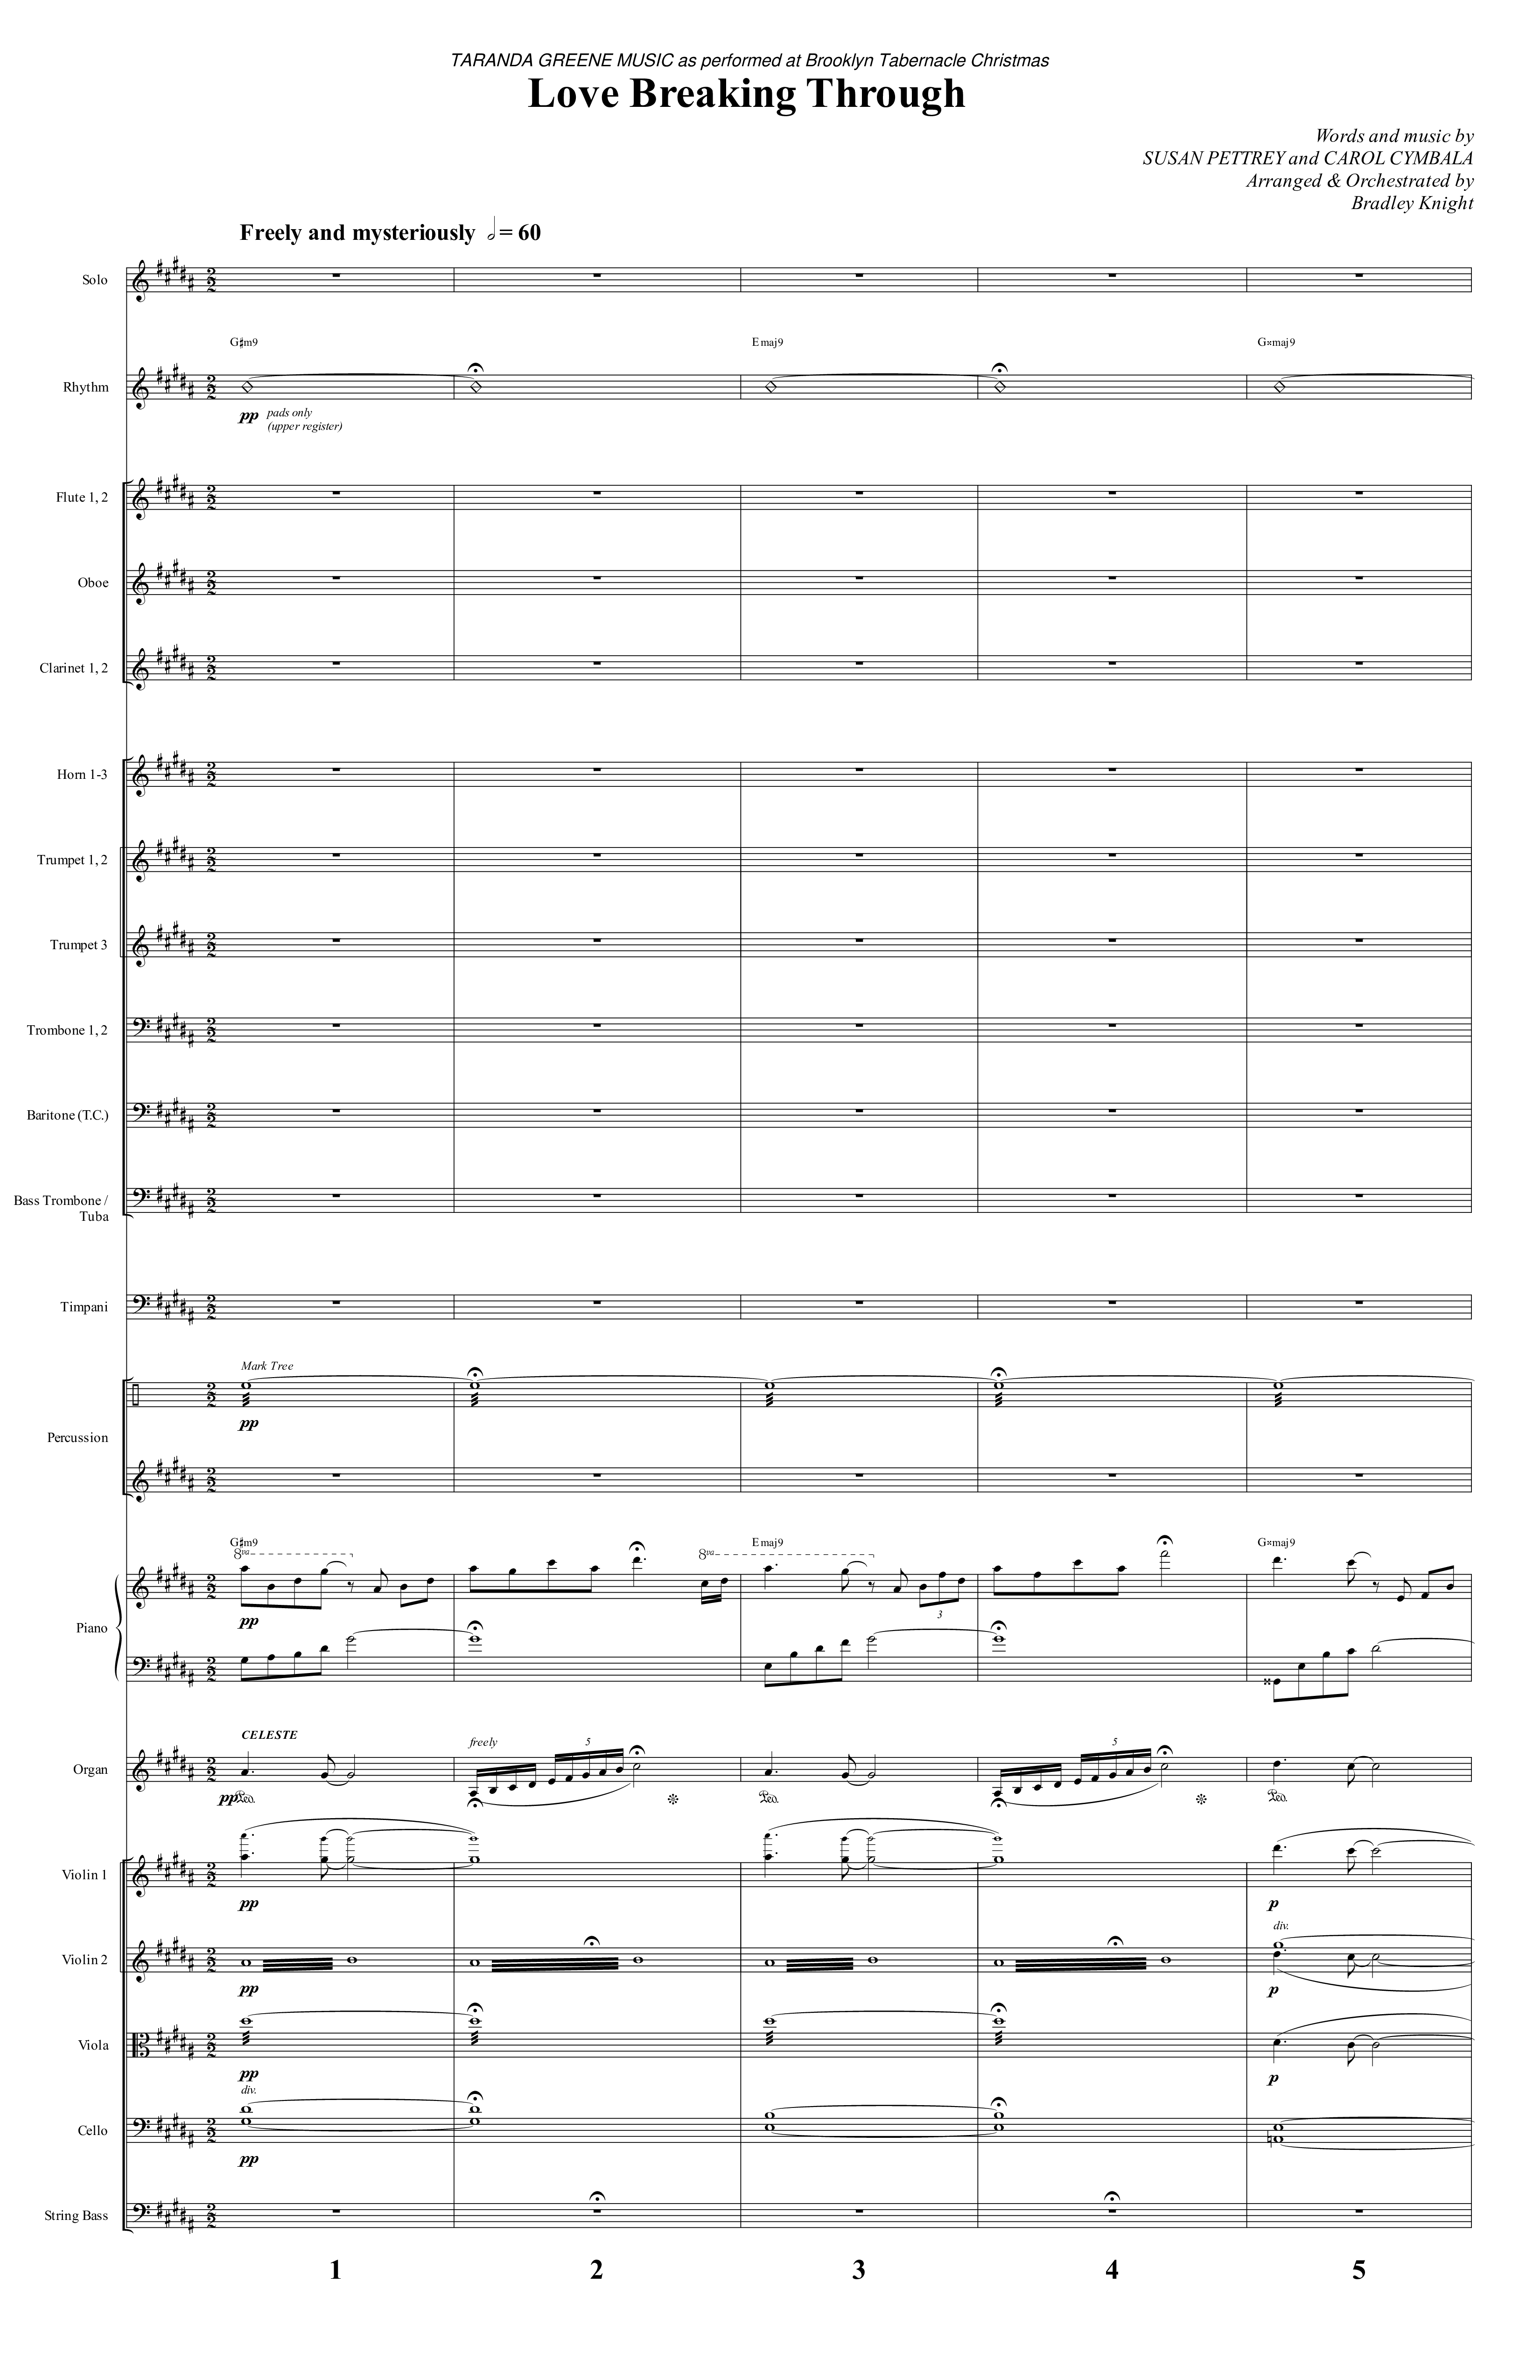 Love Breaking Through Conductor's Score (TaRanda Greene / Arr. Bradley Knight / The Brooklyn Tabernacle Choir)